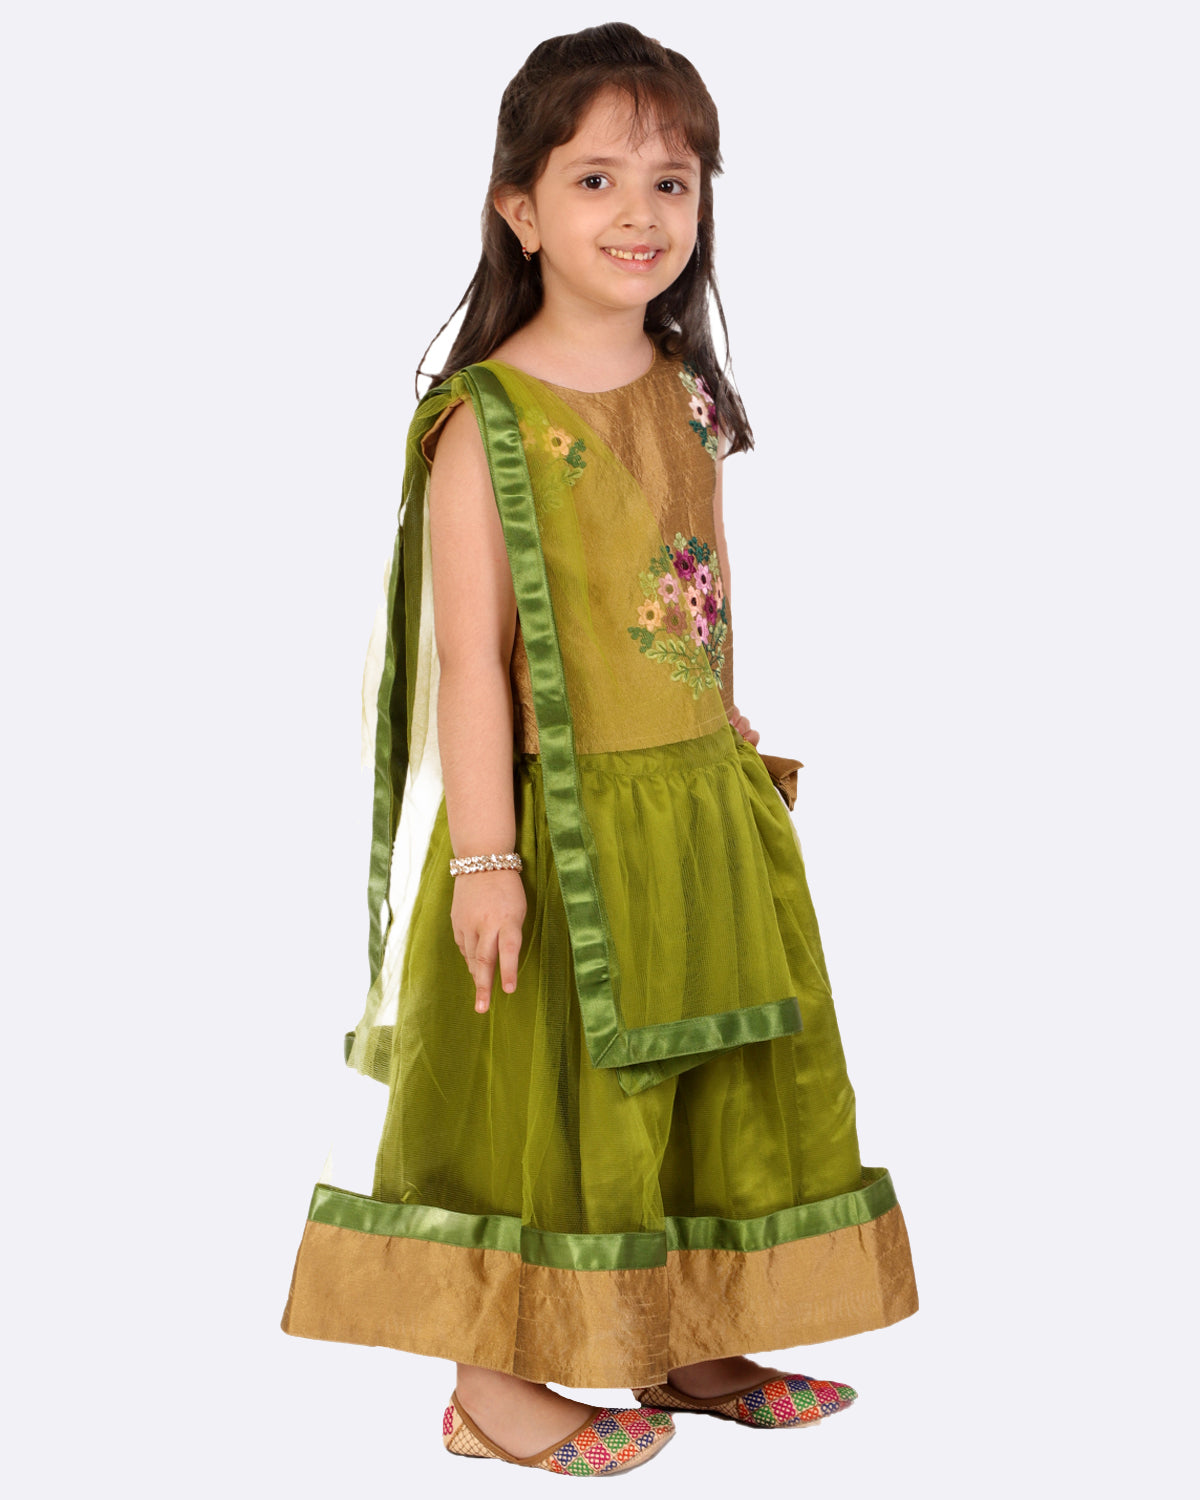 Girls Embroidered Lehnga Choli Set With Dupatta (Beige & Light Green)